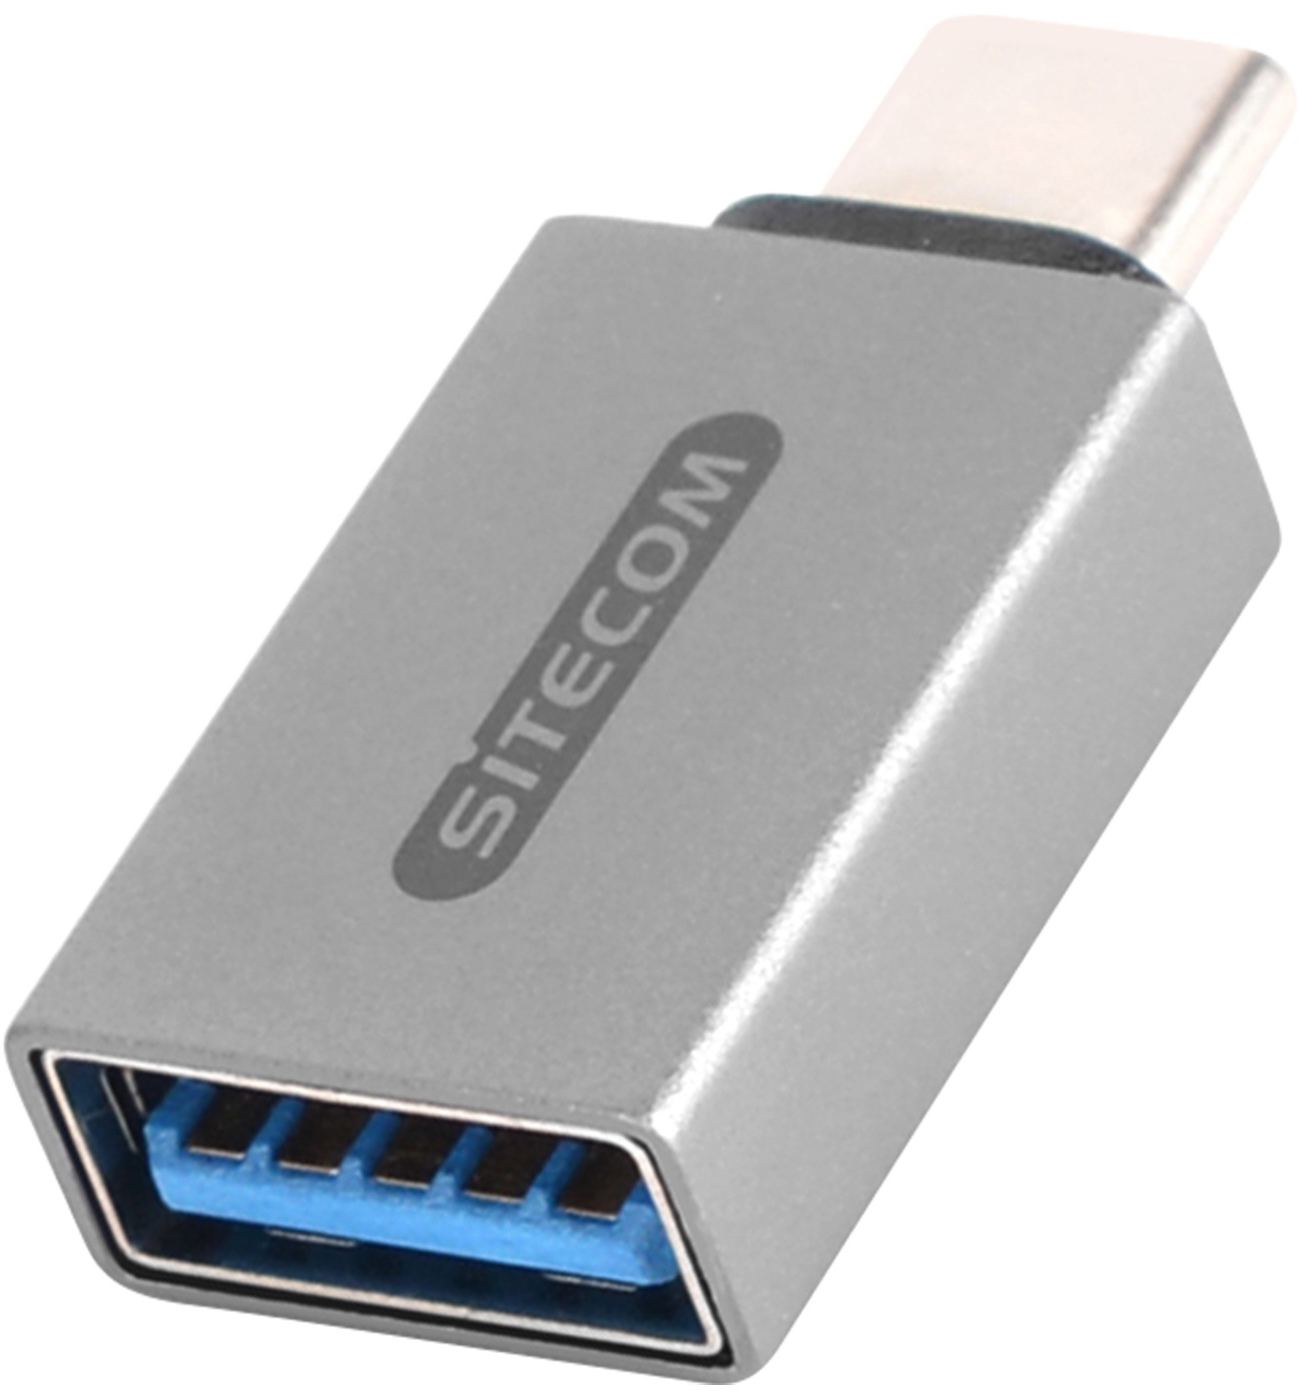 SITECOM USB-C to USB Adapter CN-370